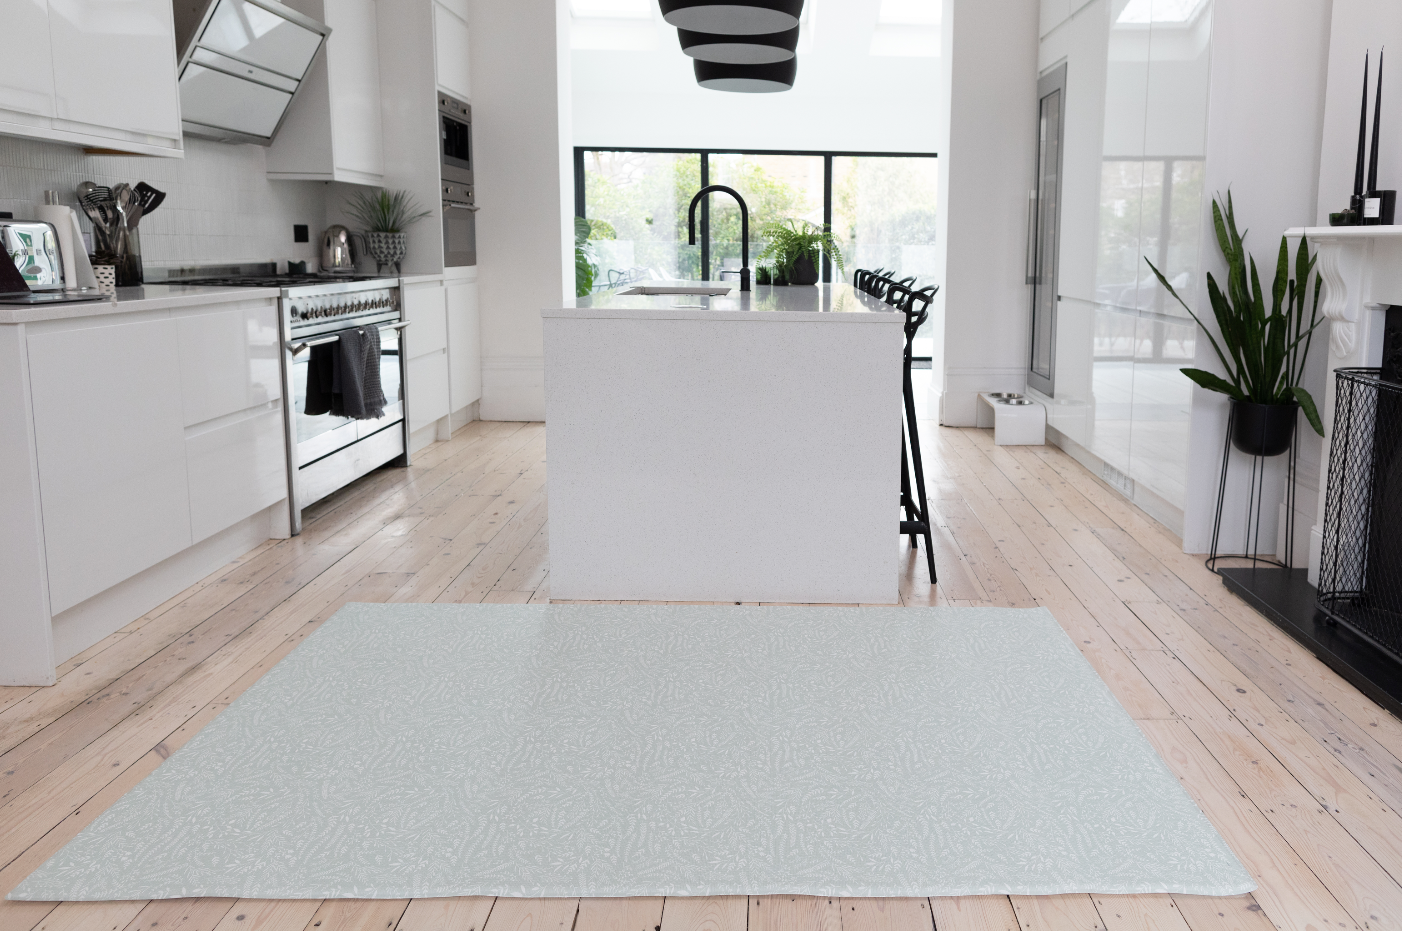 stylish rambler motif play mat in modern family kitchen 